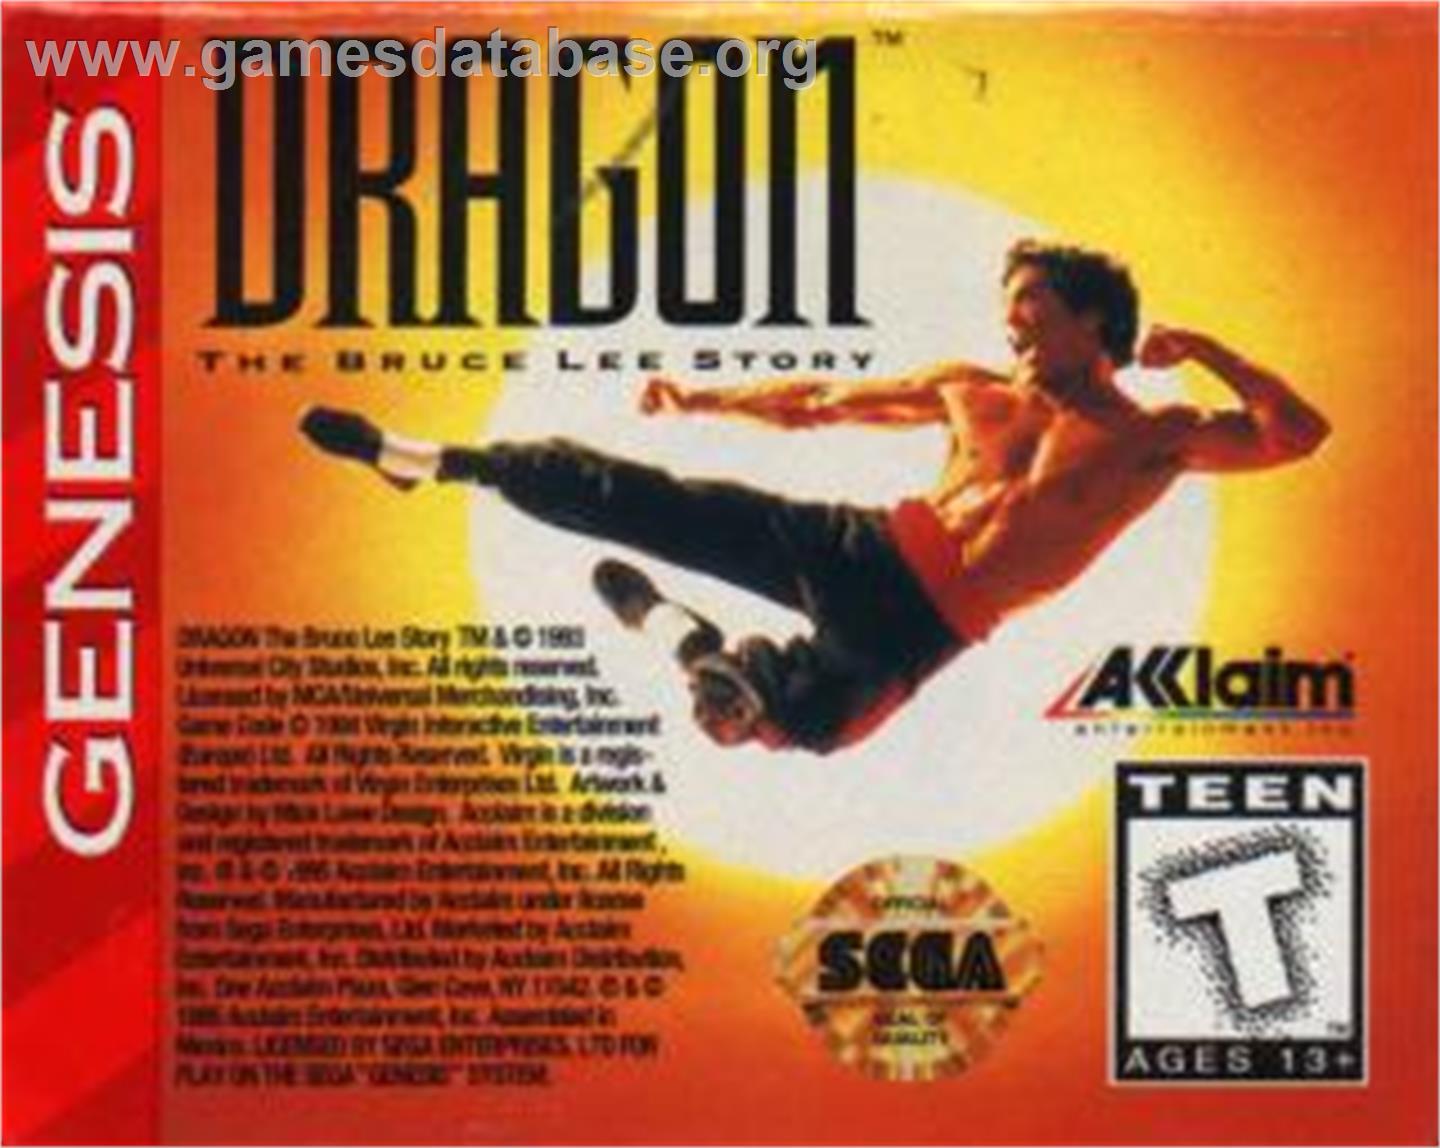 Dragon: The Bruce Lee Story - Sega Nomad - Artwork - Cartridge